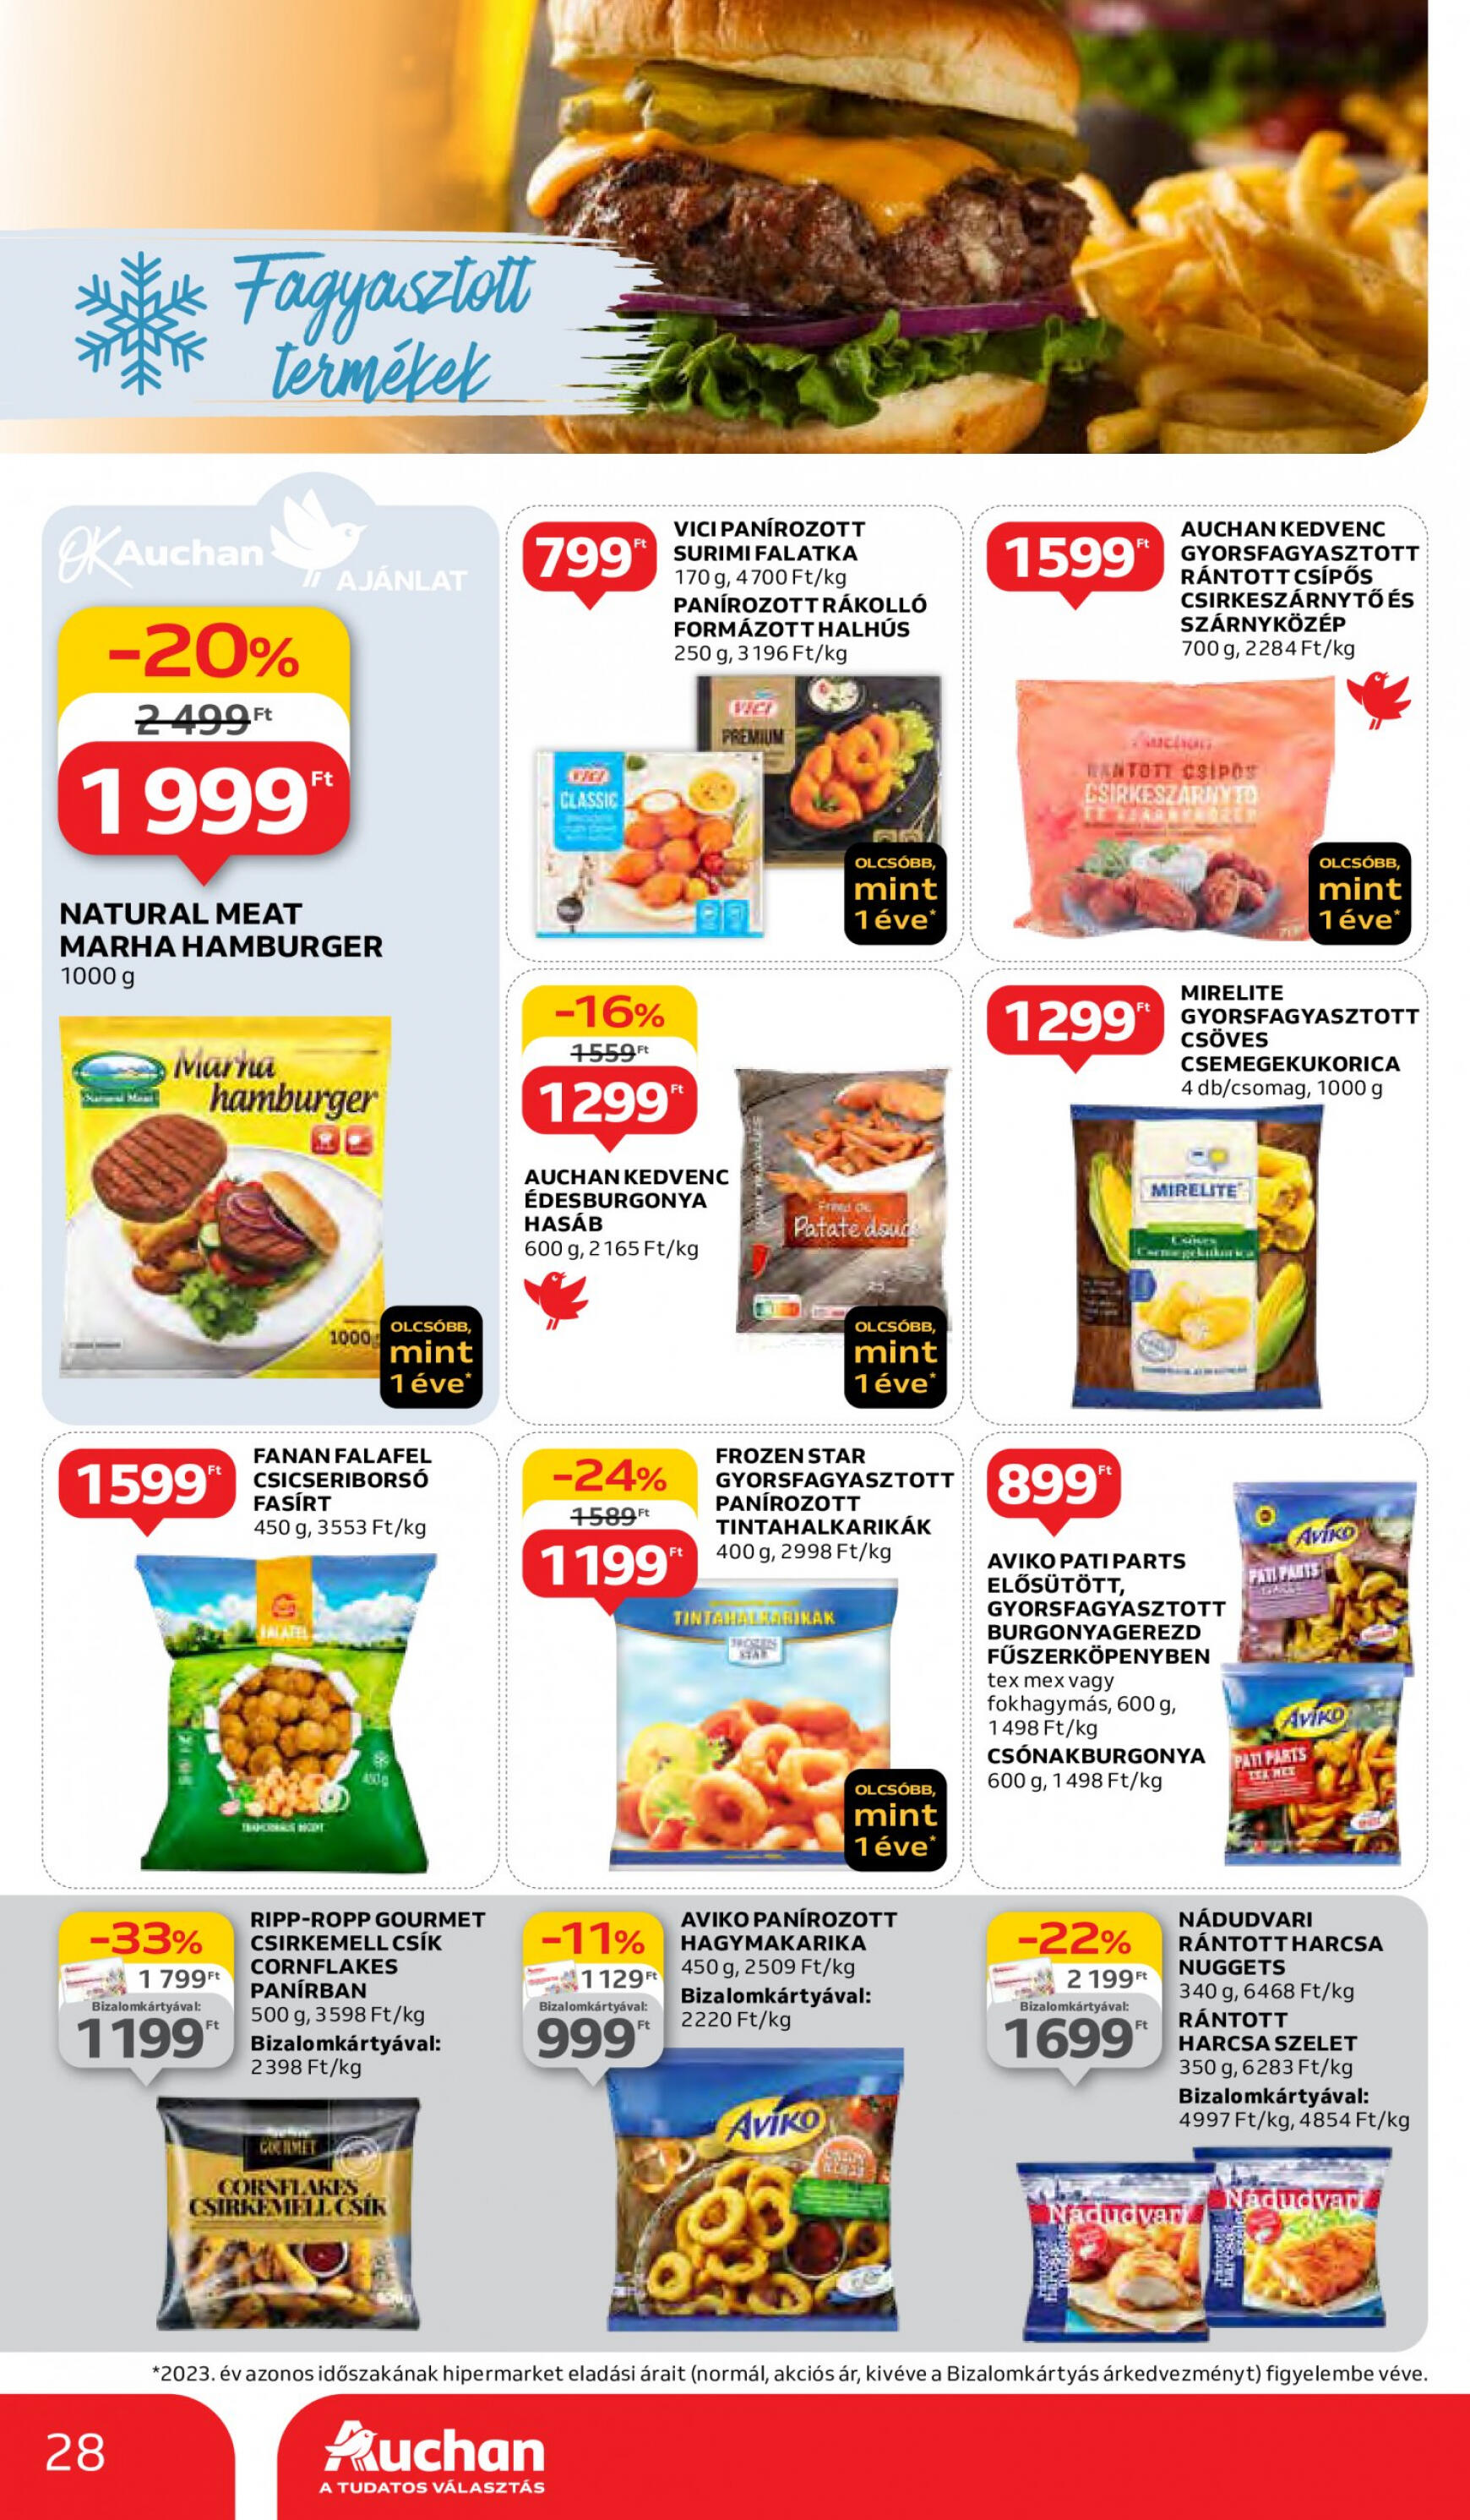 auchan - Aktuális újság Auchan 05.02. - 05.08. - page: 28